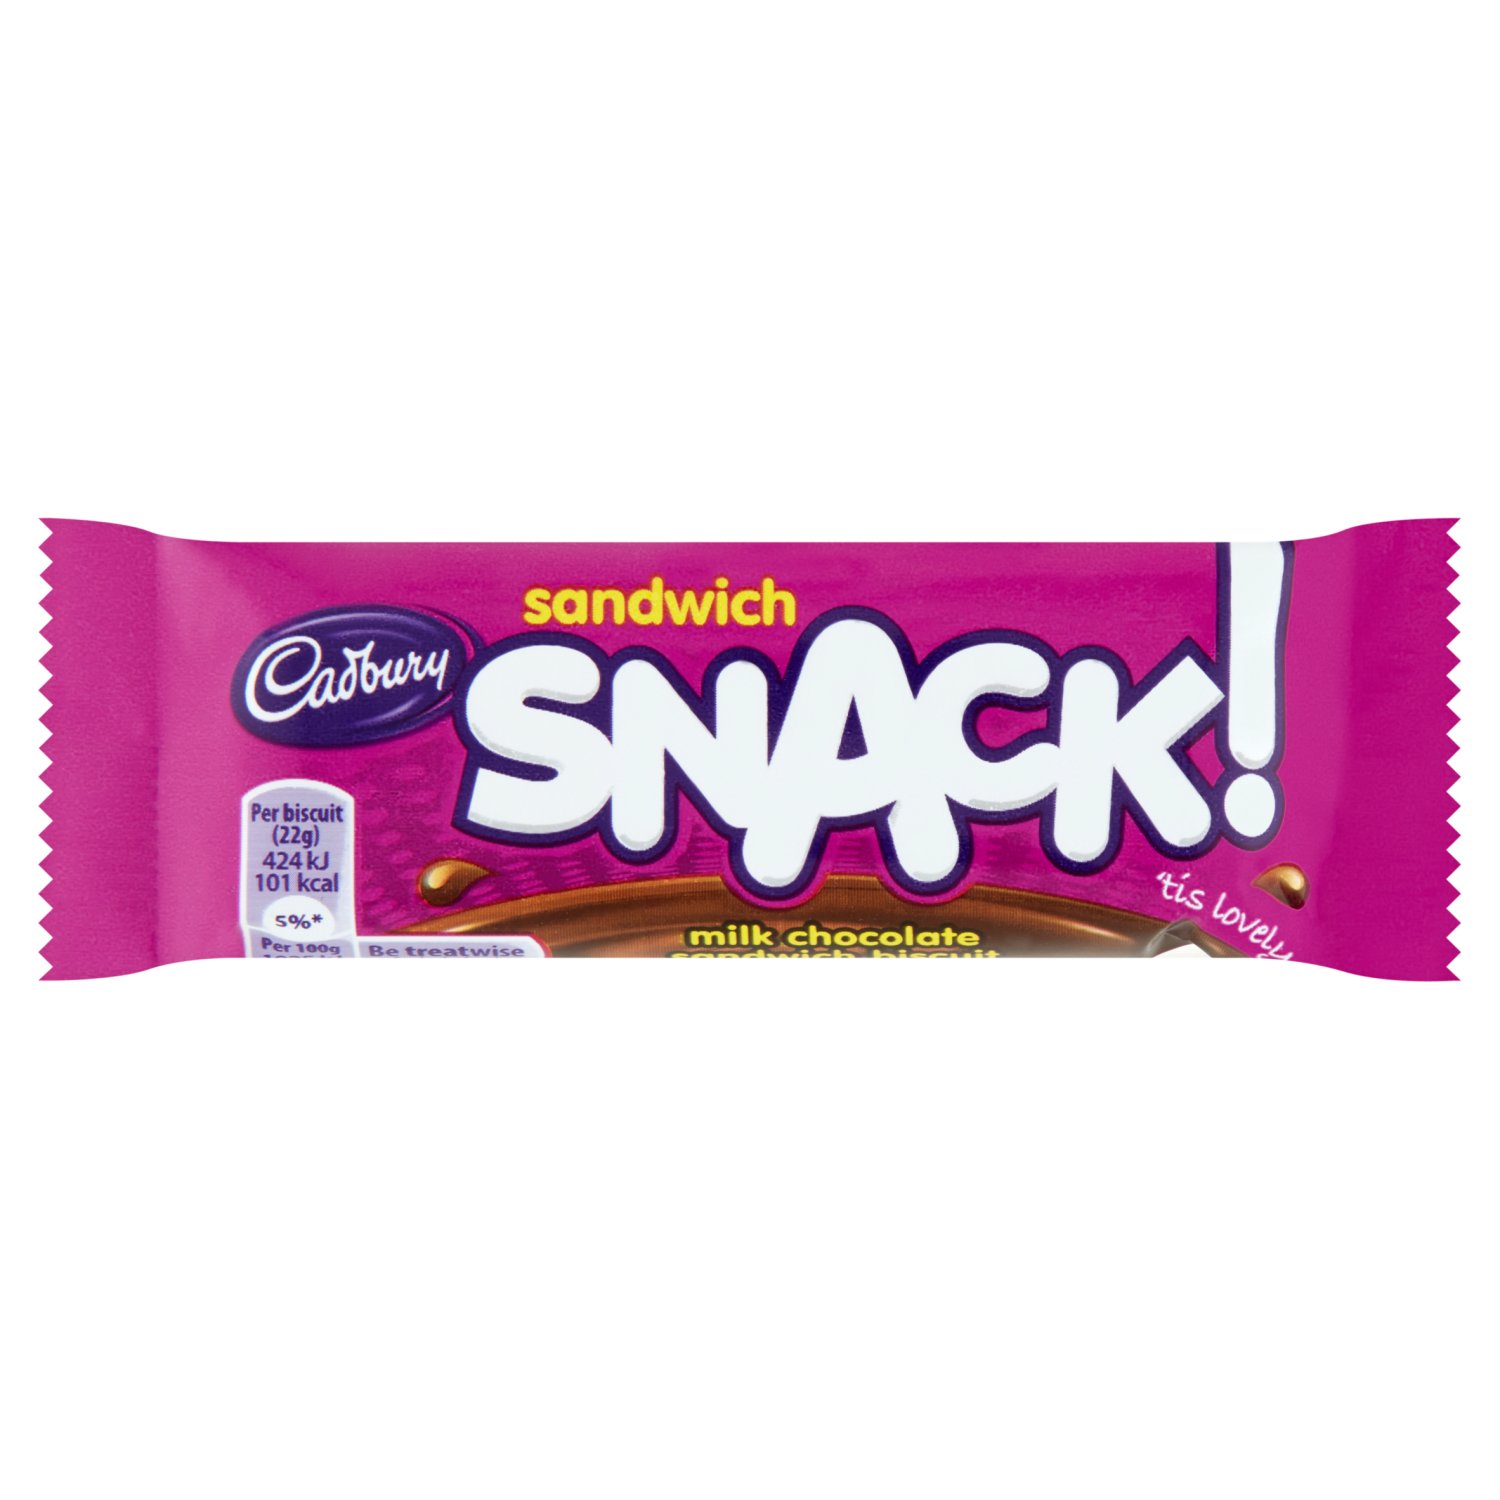 Cadbury Snack Sandwich (22 g)